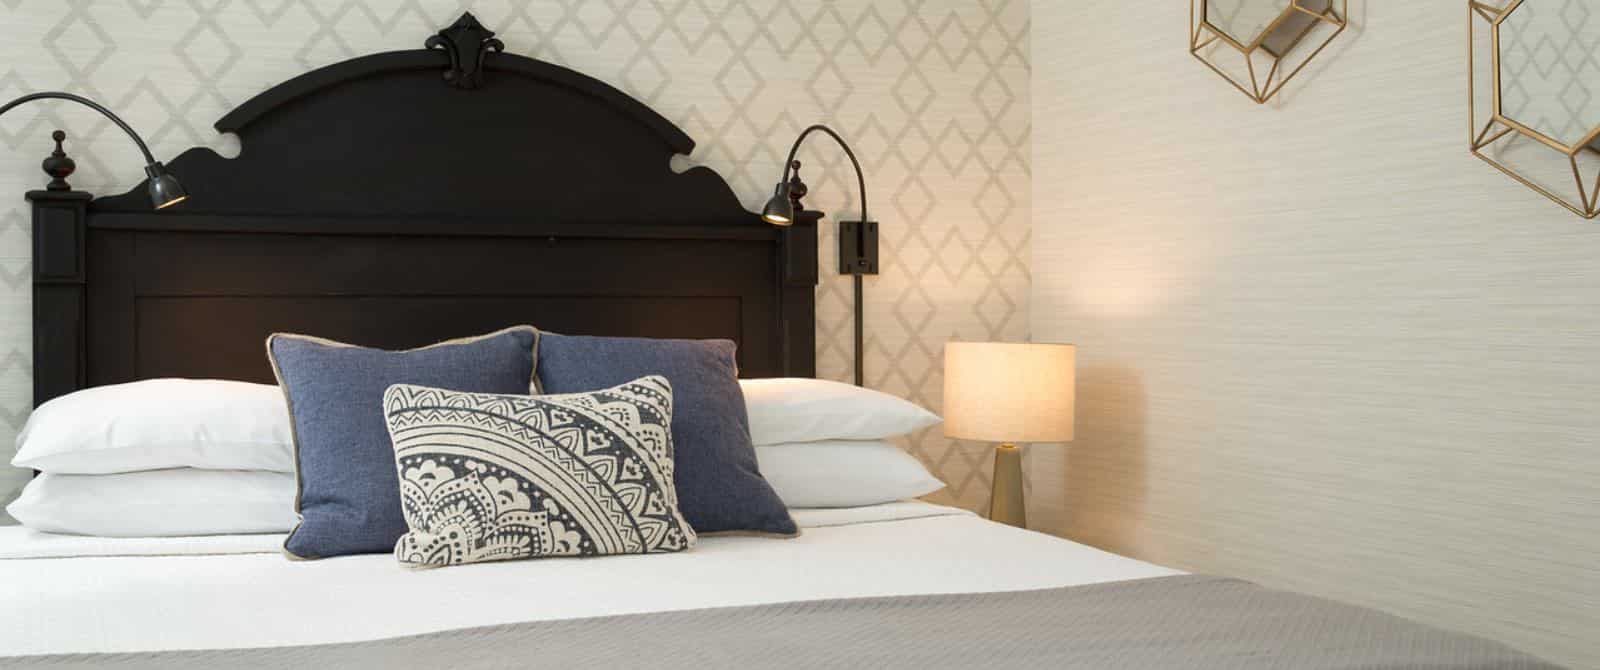 Bedroom with dark wooden headboard, white bedding, gray blanket, denim pillows, and modern wallpaper